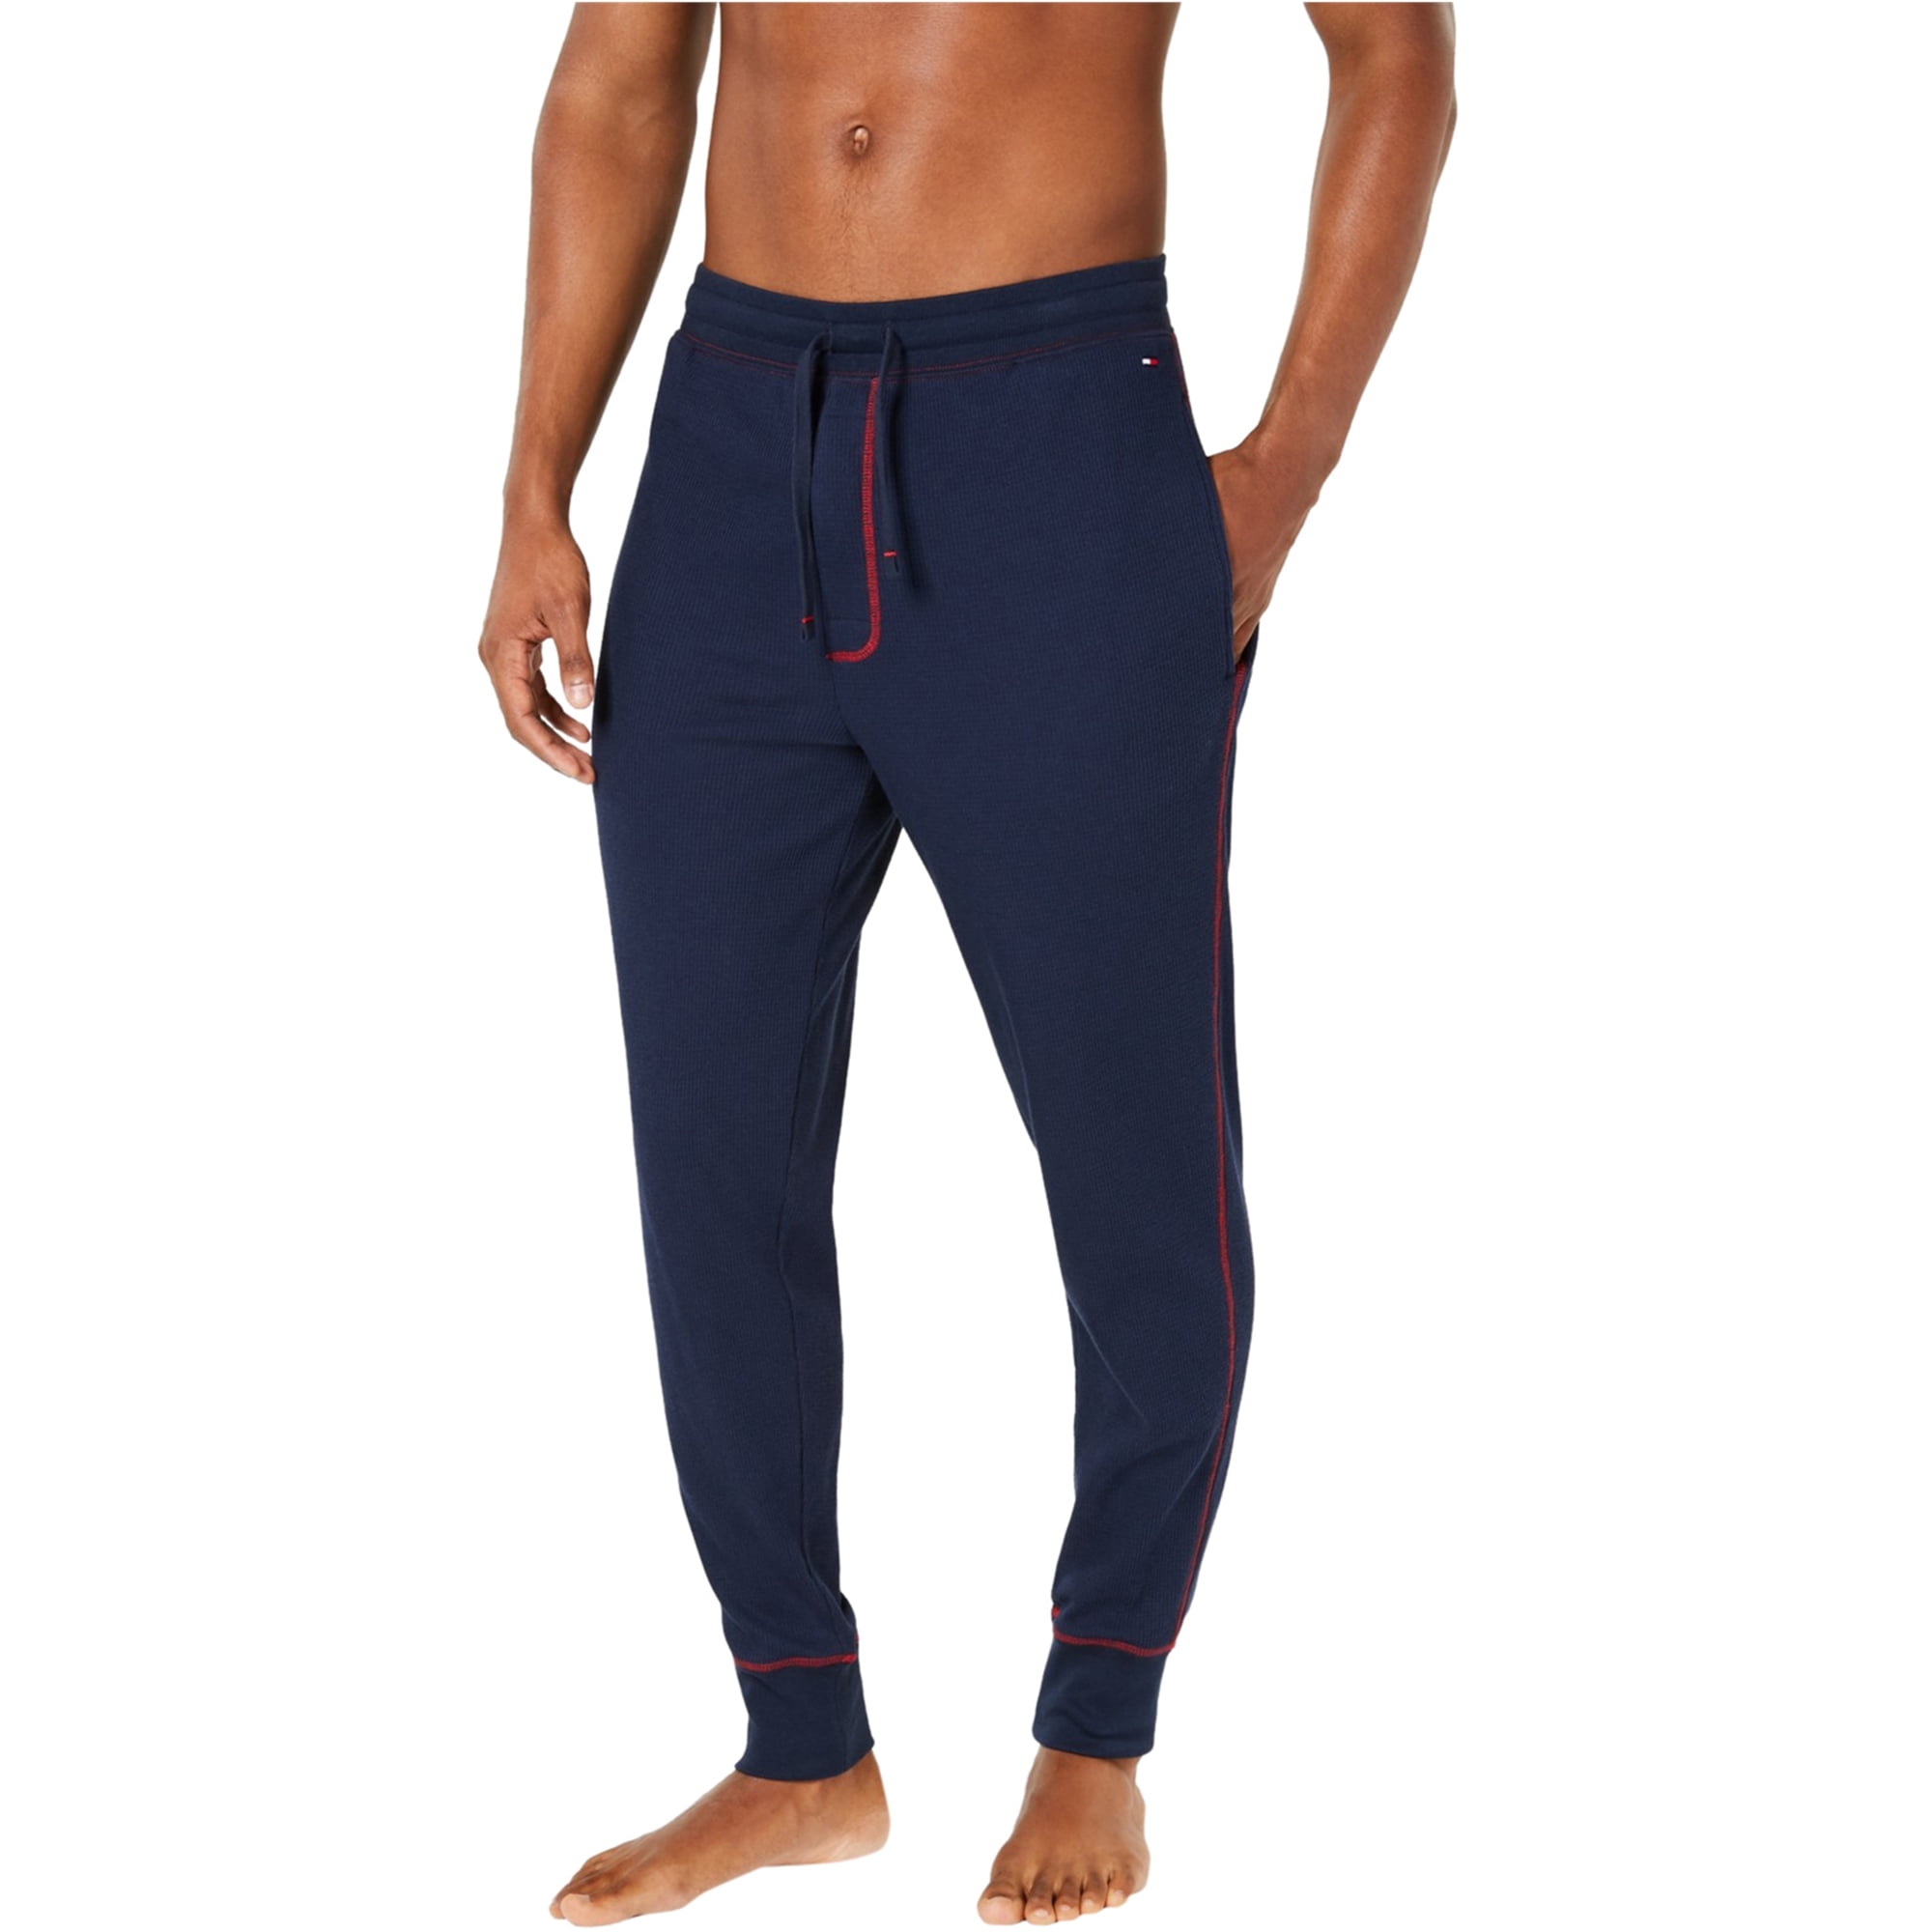 Tommy Hilfiger Womens Logo Jogger Sweatpant Lounge Pant Bottom Pajama Pj